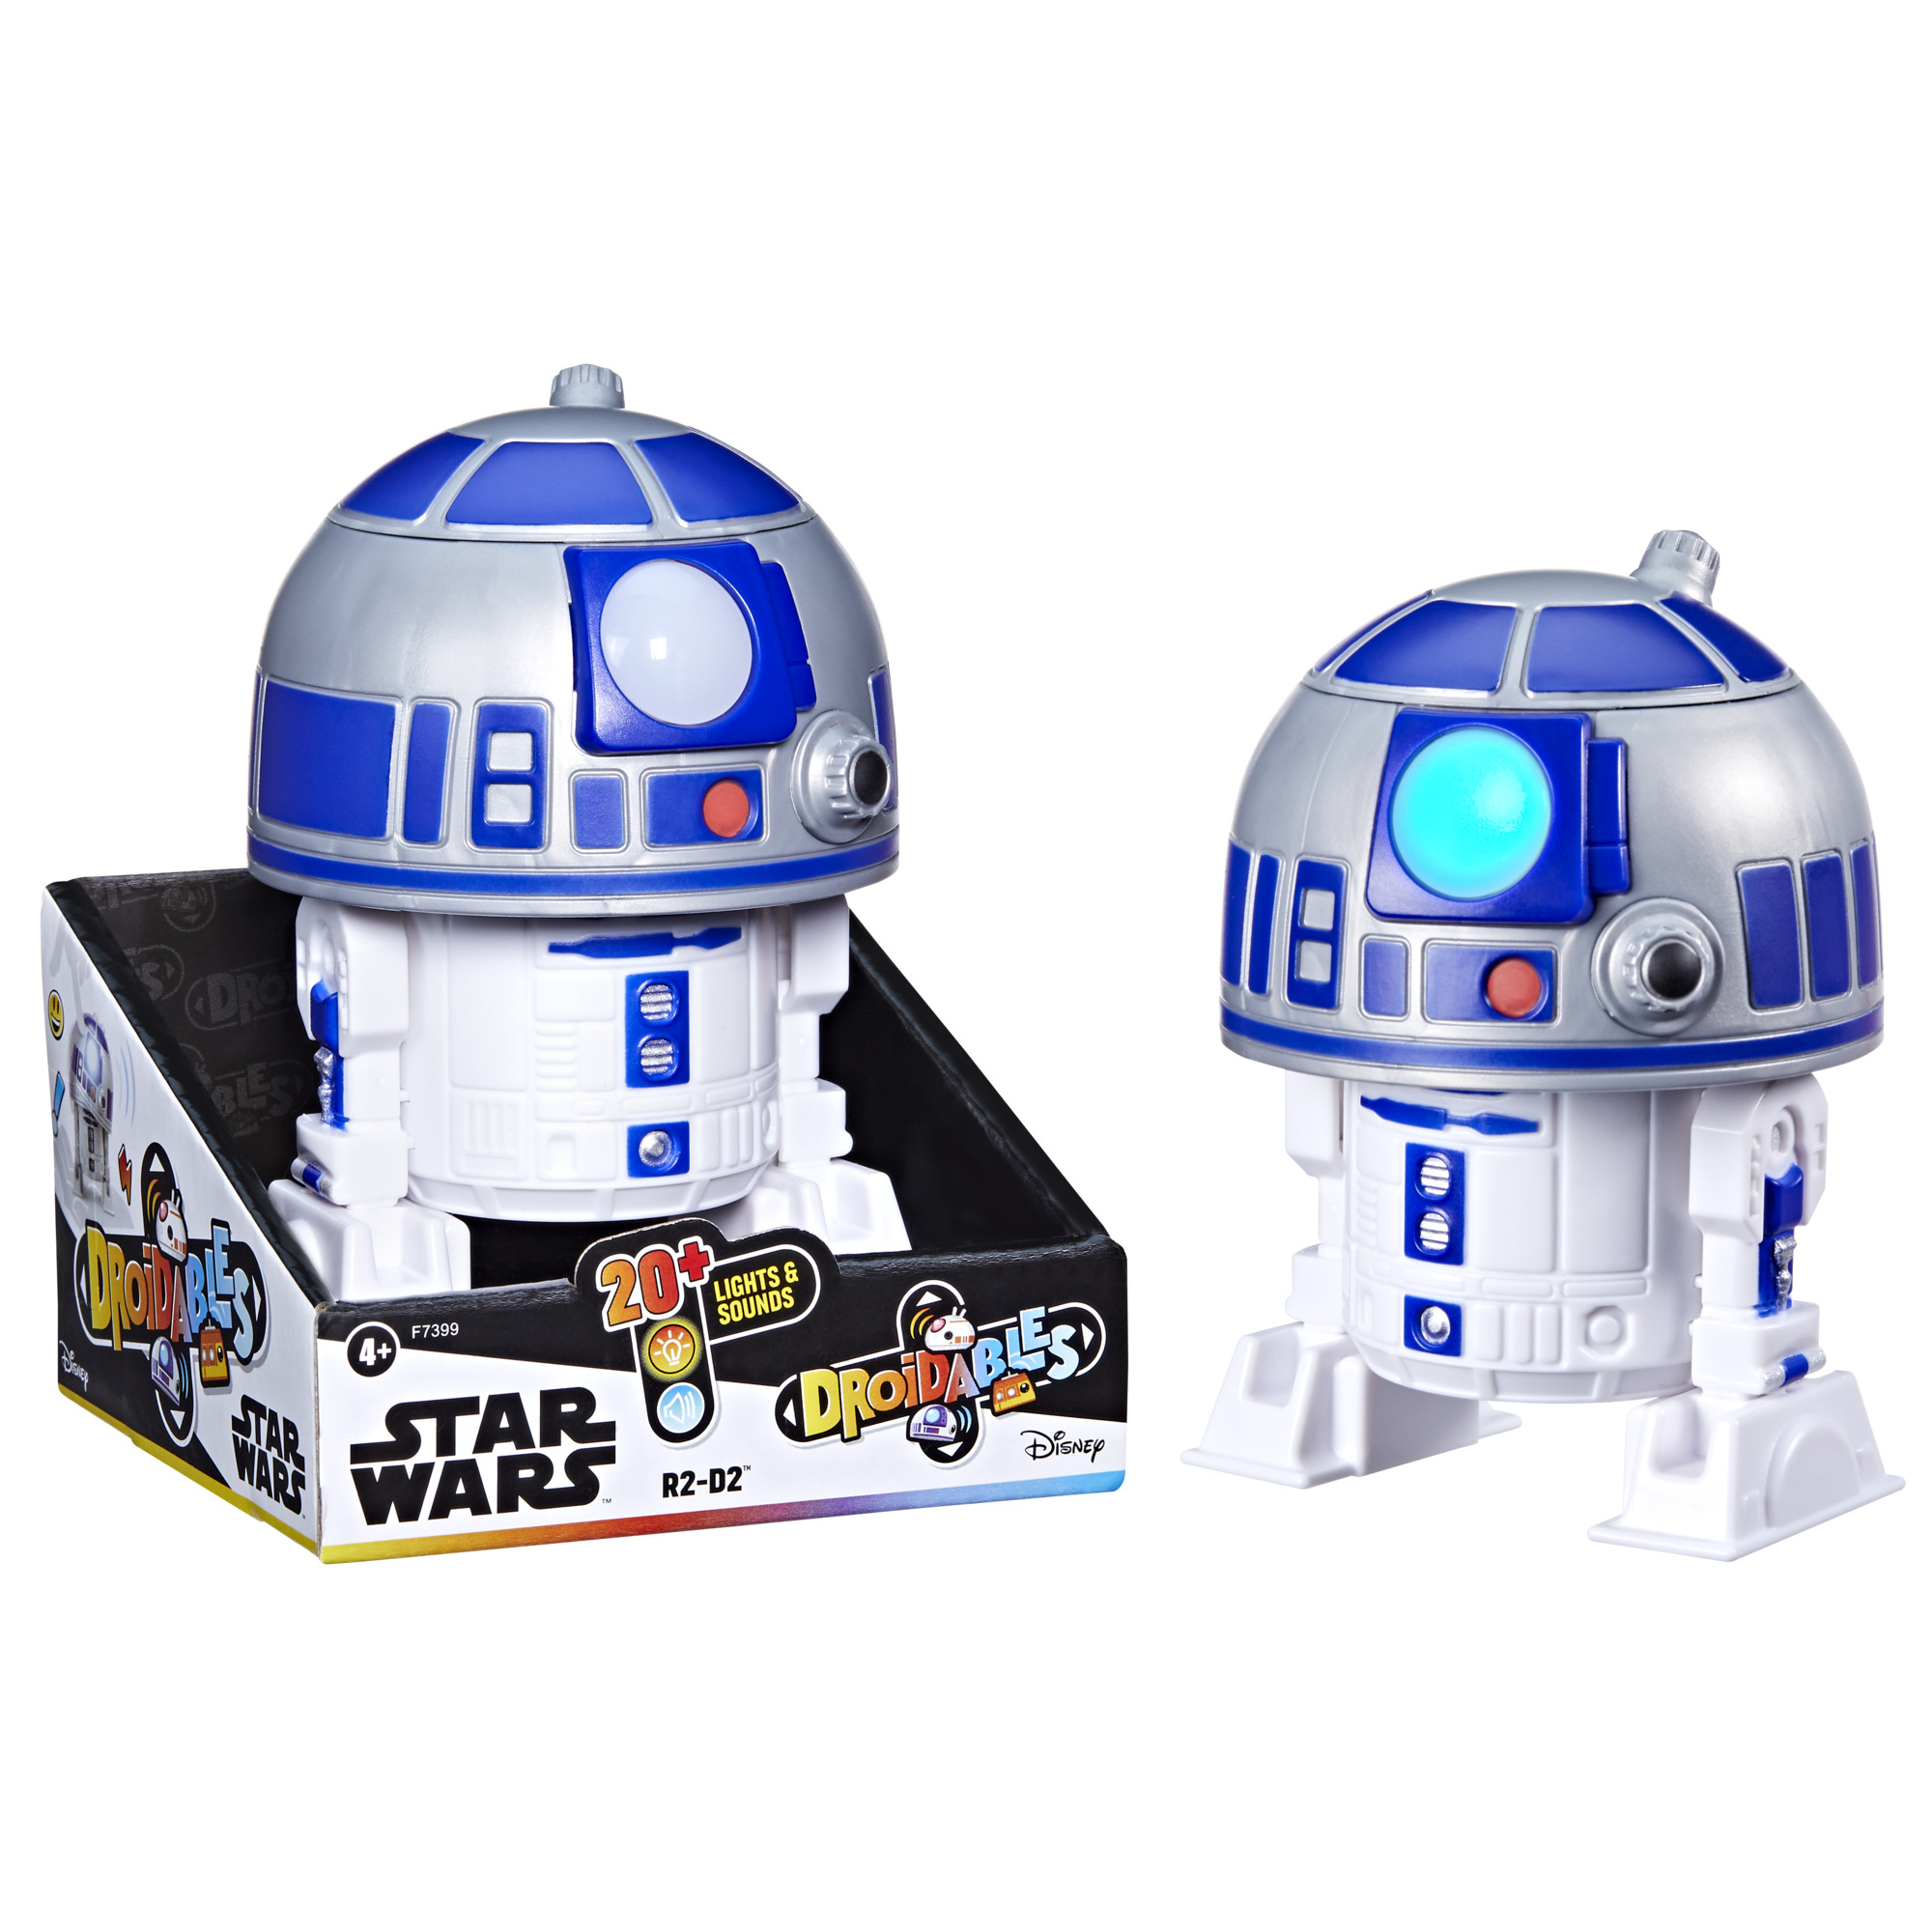 Star Wars: Droidables R2-D2 Action Figure (4.75”)